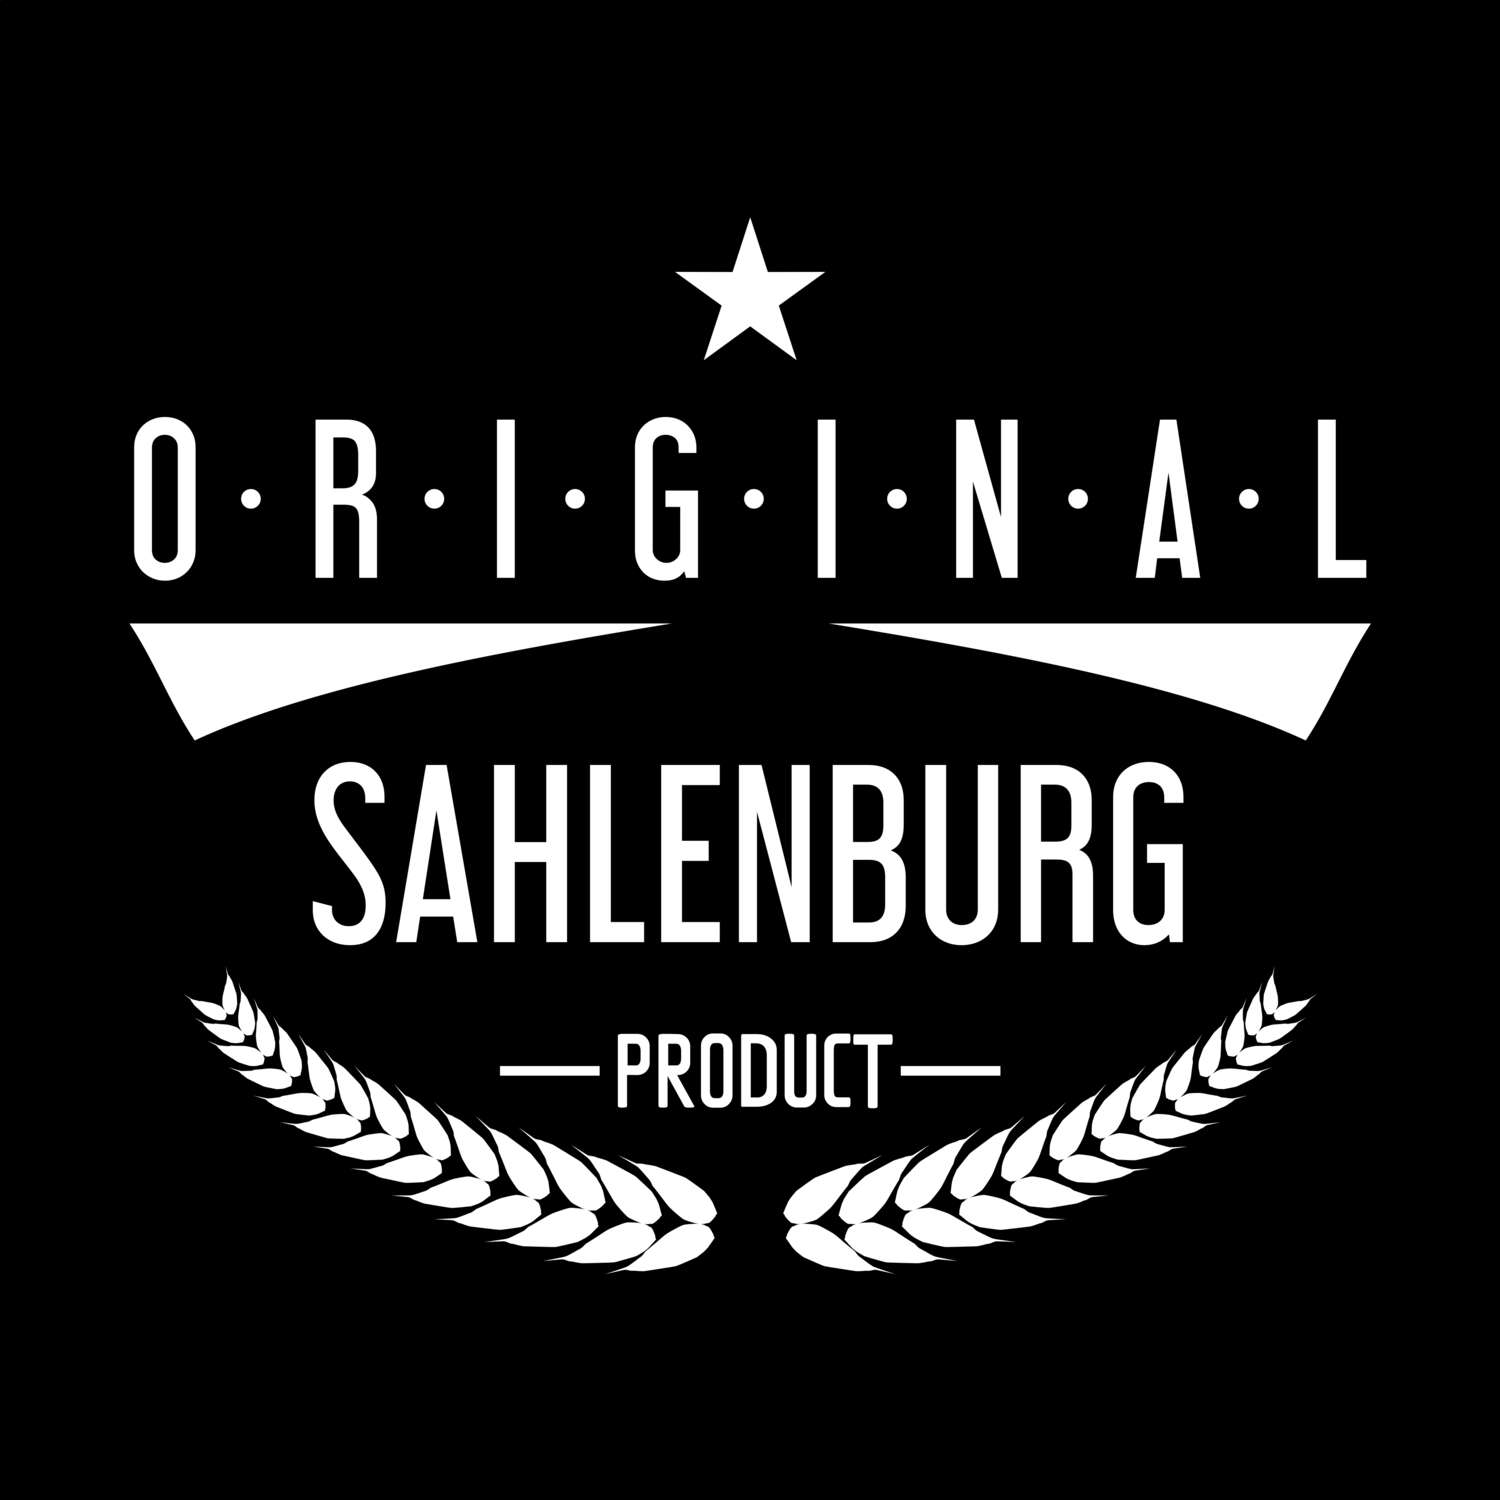 Sahlenburg T-Shirt »Original Product«